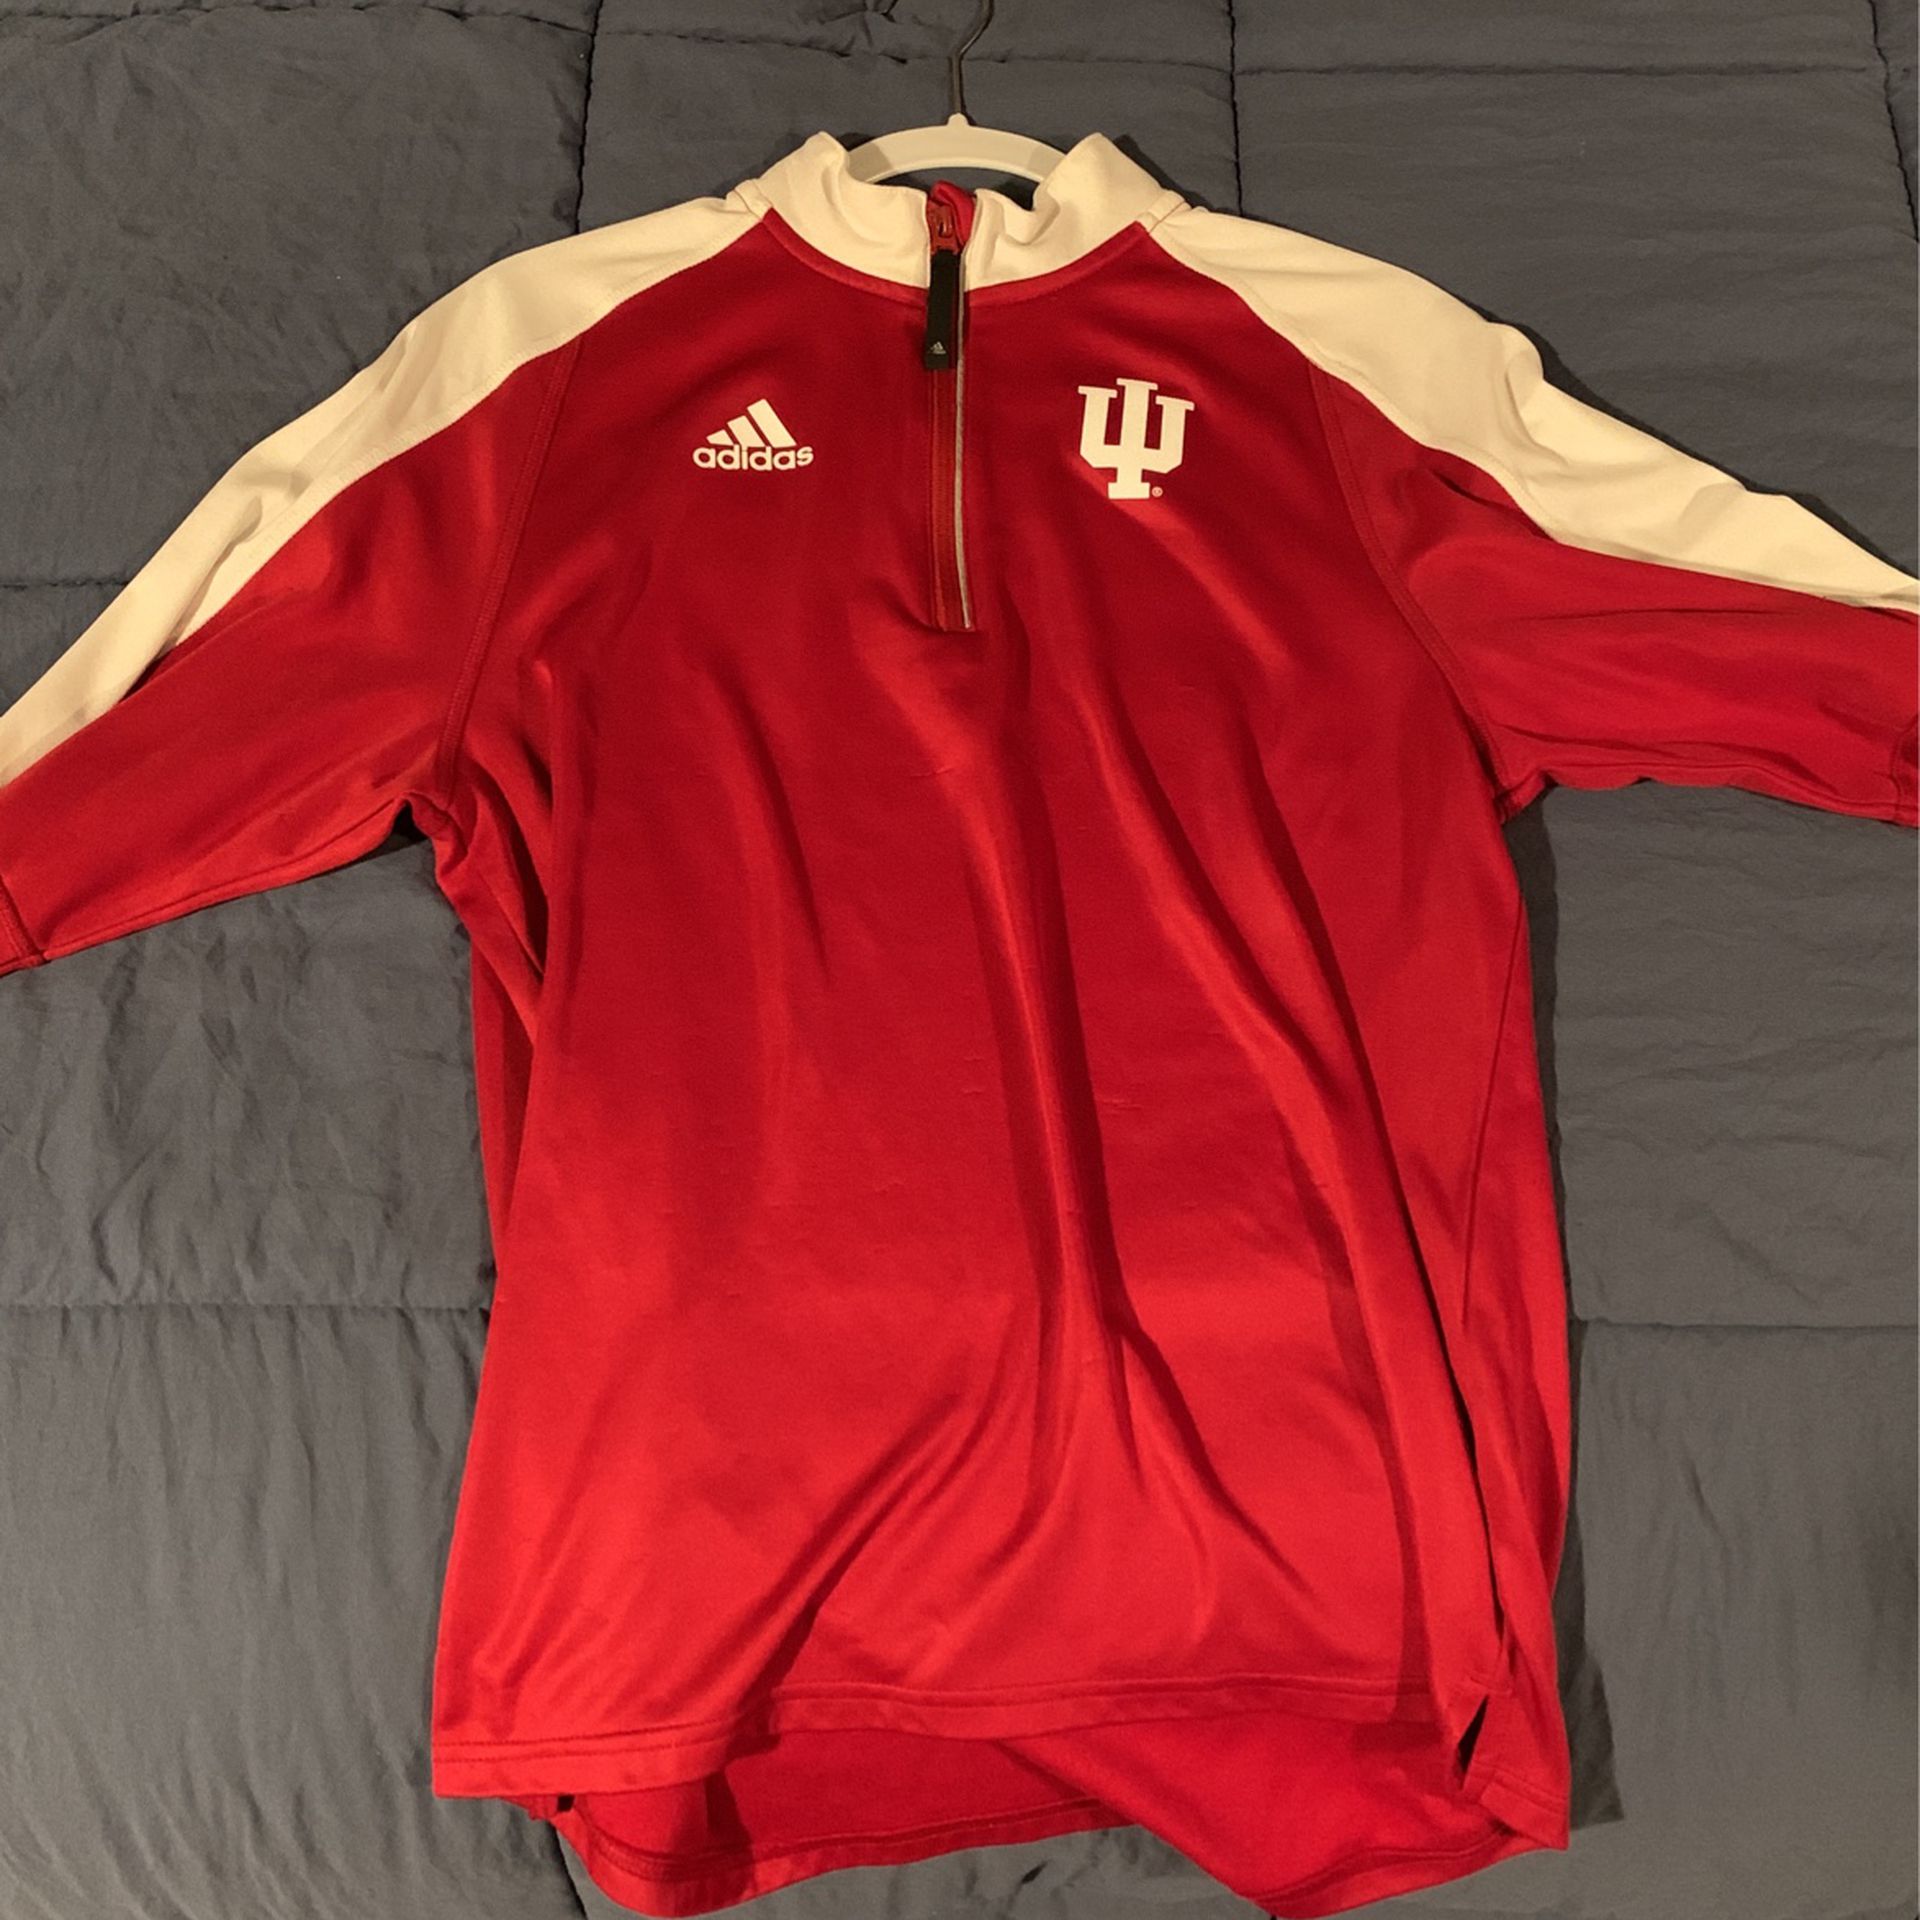 Lightweight Indiana University zip-up Adidas Jacket